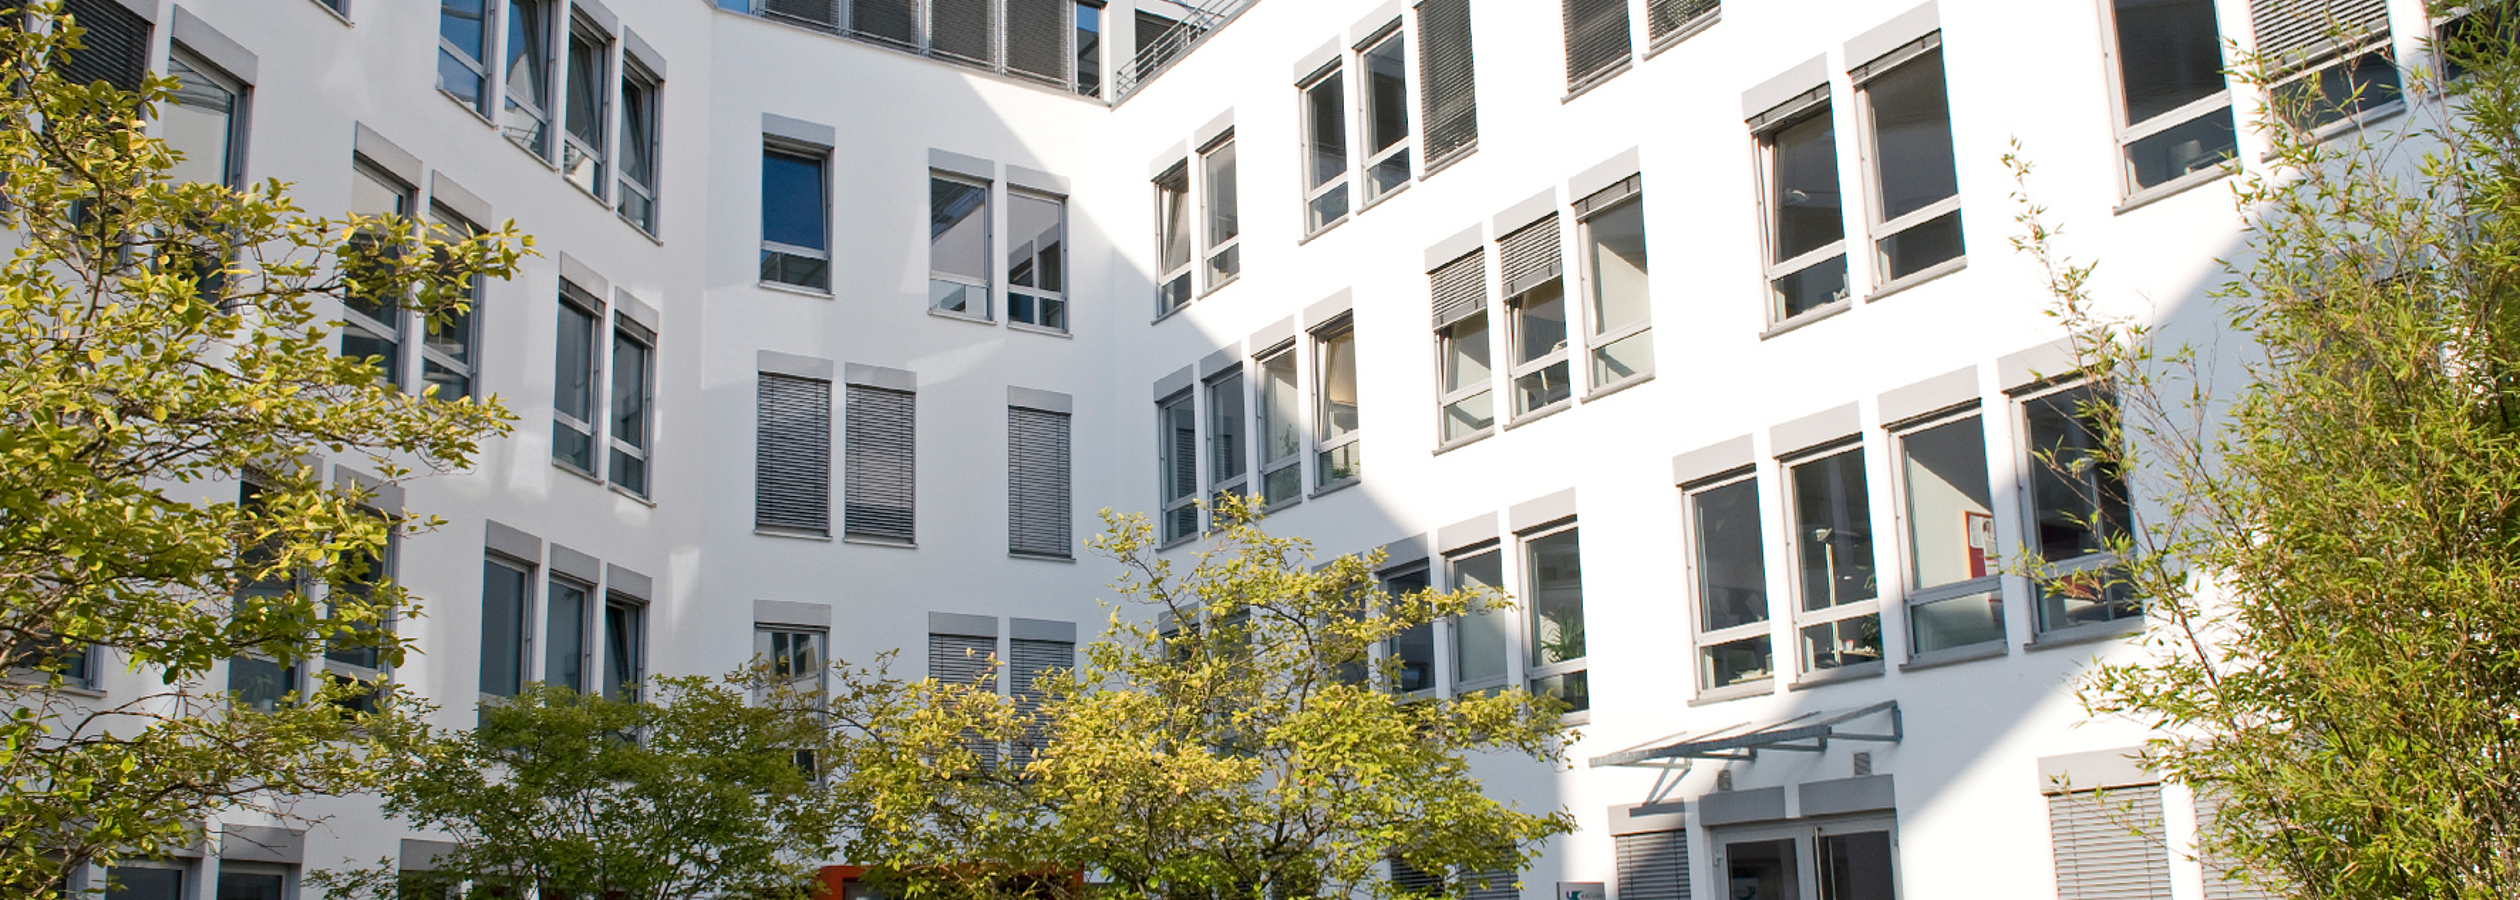 Buildings: University of Bremen and Jacobs University Bremen